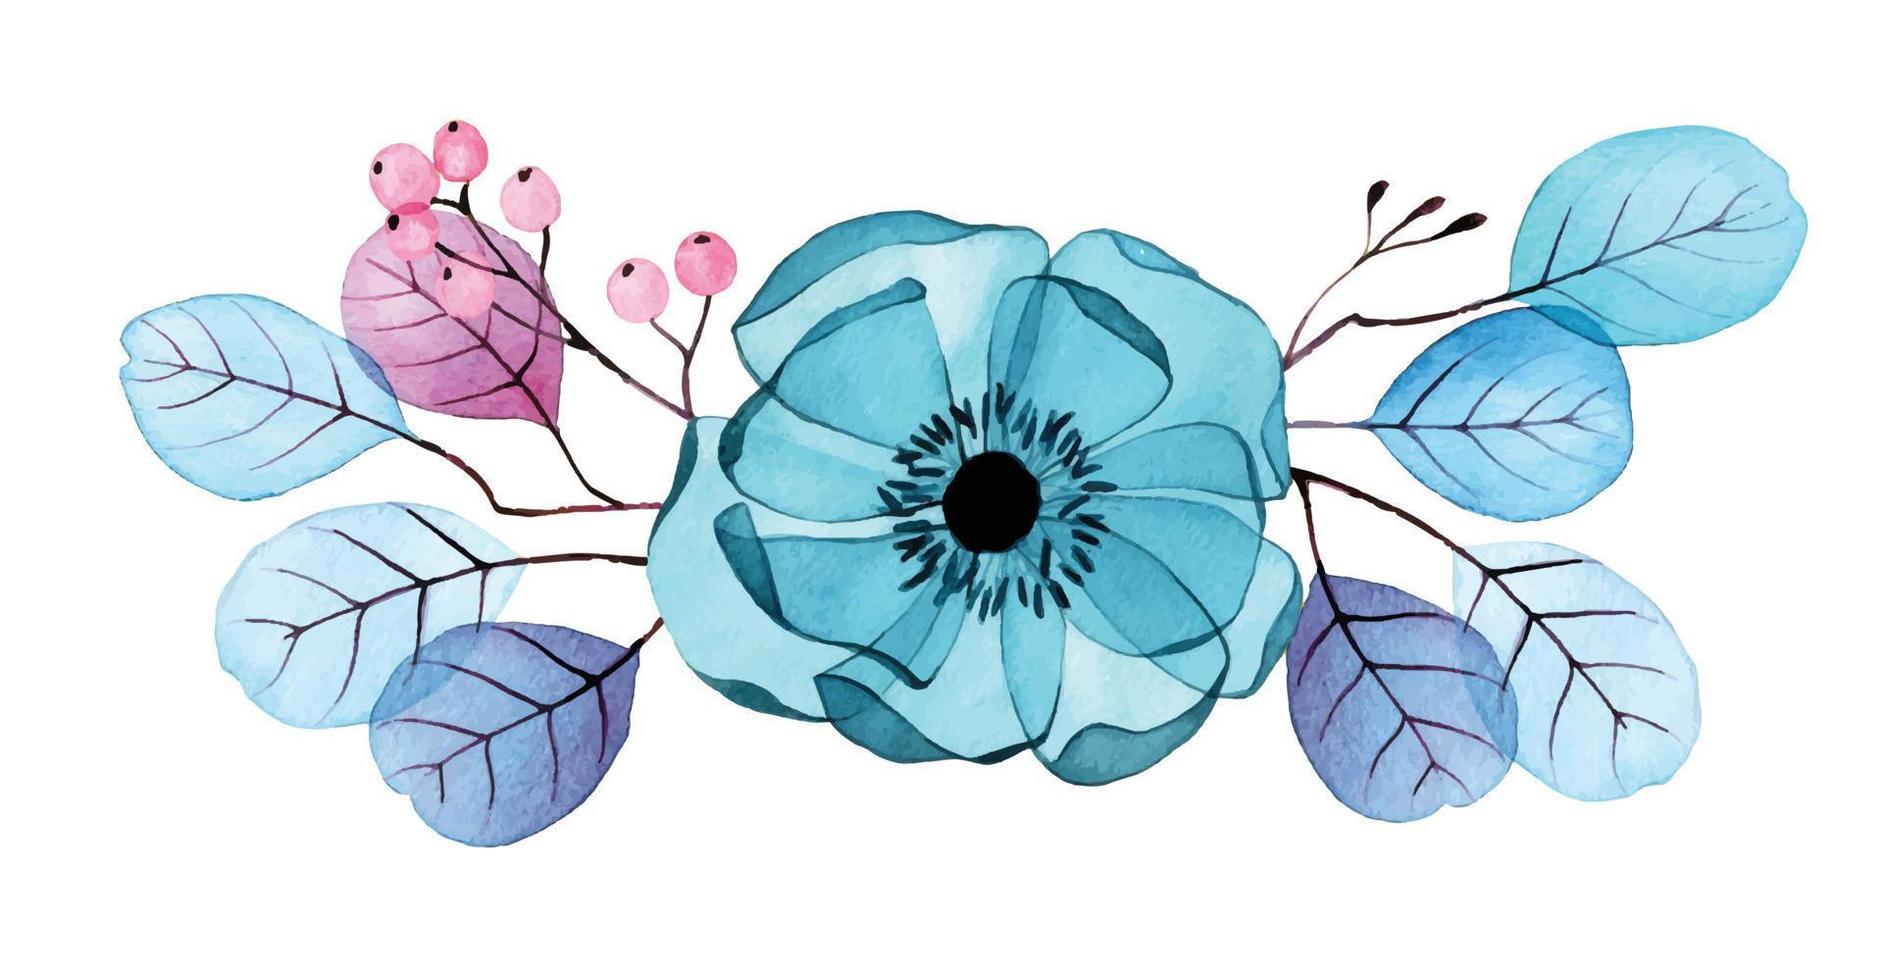 dibujo de acuarela. composición, un ramo de flores transparentes. flores azules y moradas de anémonas, azafranes y hojas de eucalipto. decoración para boda, tarjeta de felicitación, invitación vector